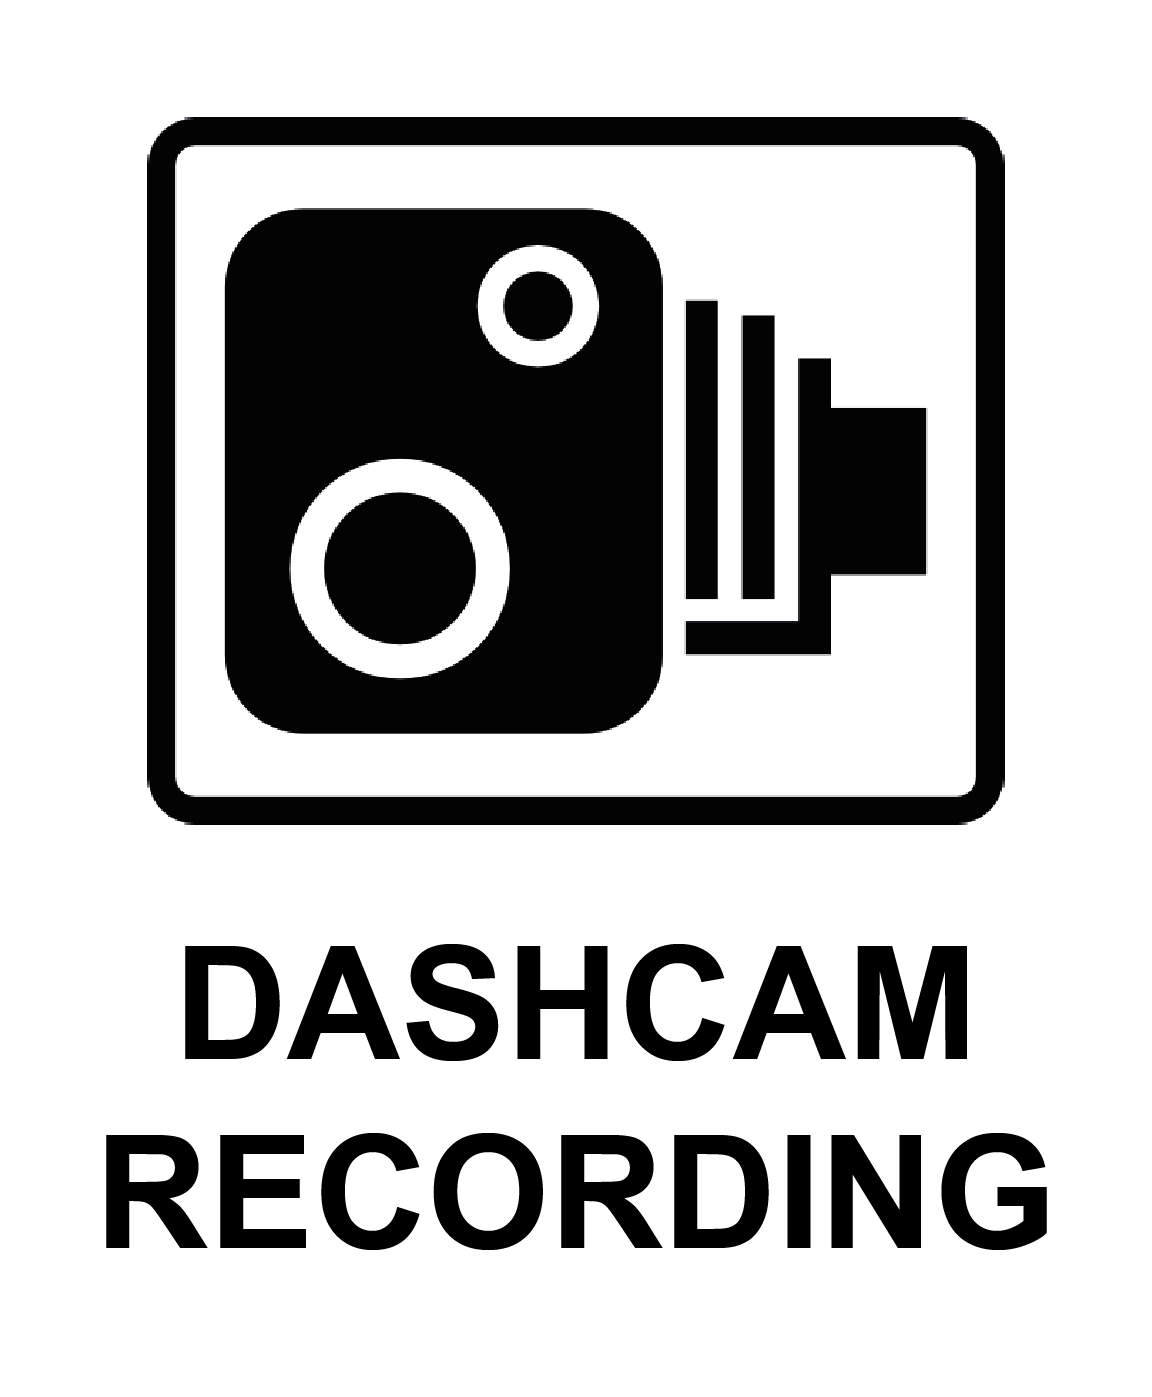 Dashcam recording portrait labels